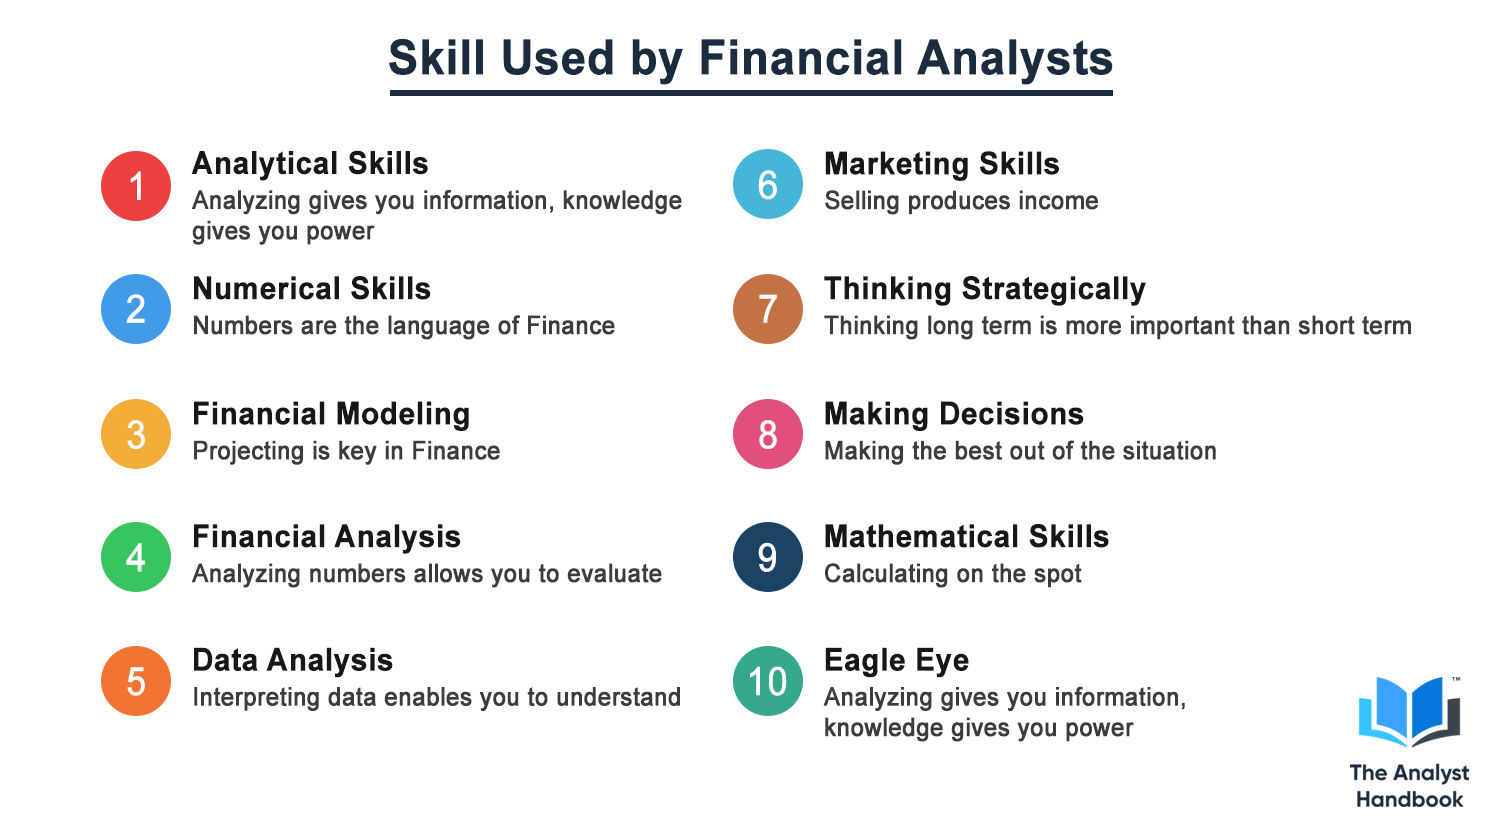 Financial Analyst Skills